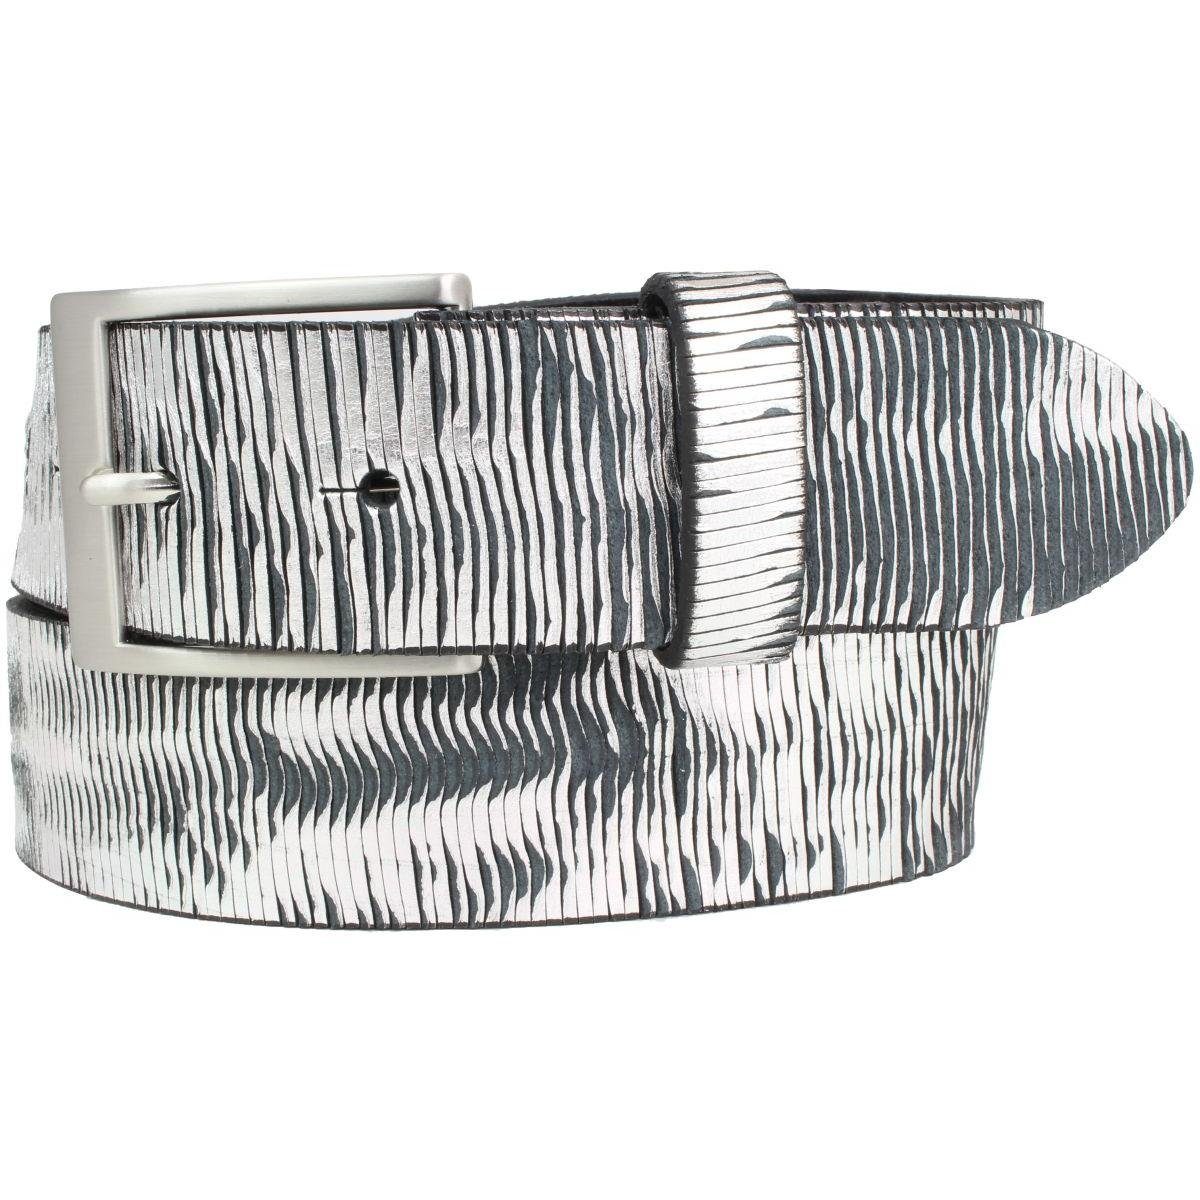 BELTINGER Ledergürtel Leder-Gürtel aus Vollrindleder Metall-Optik 4 cm - Herren-Gürtel Metal Schwarz Metallik, Silber